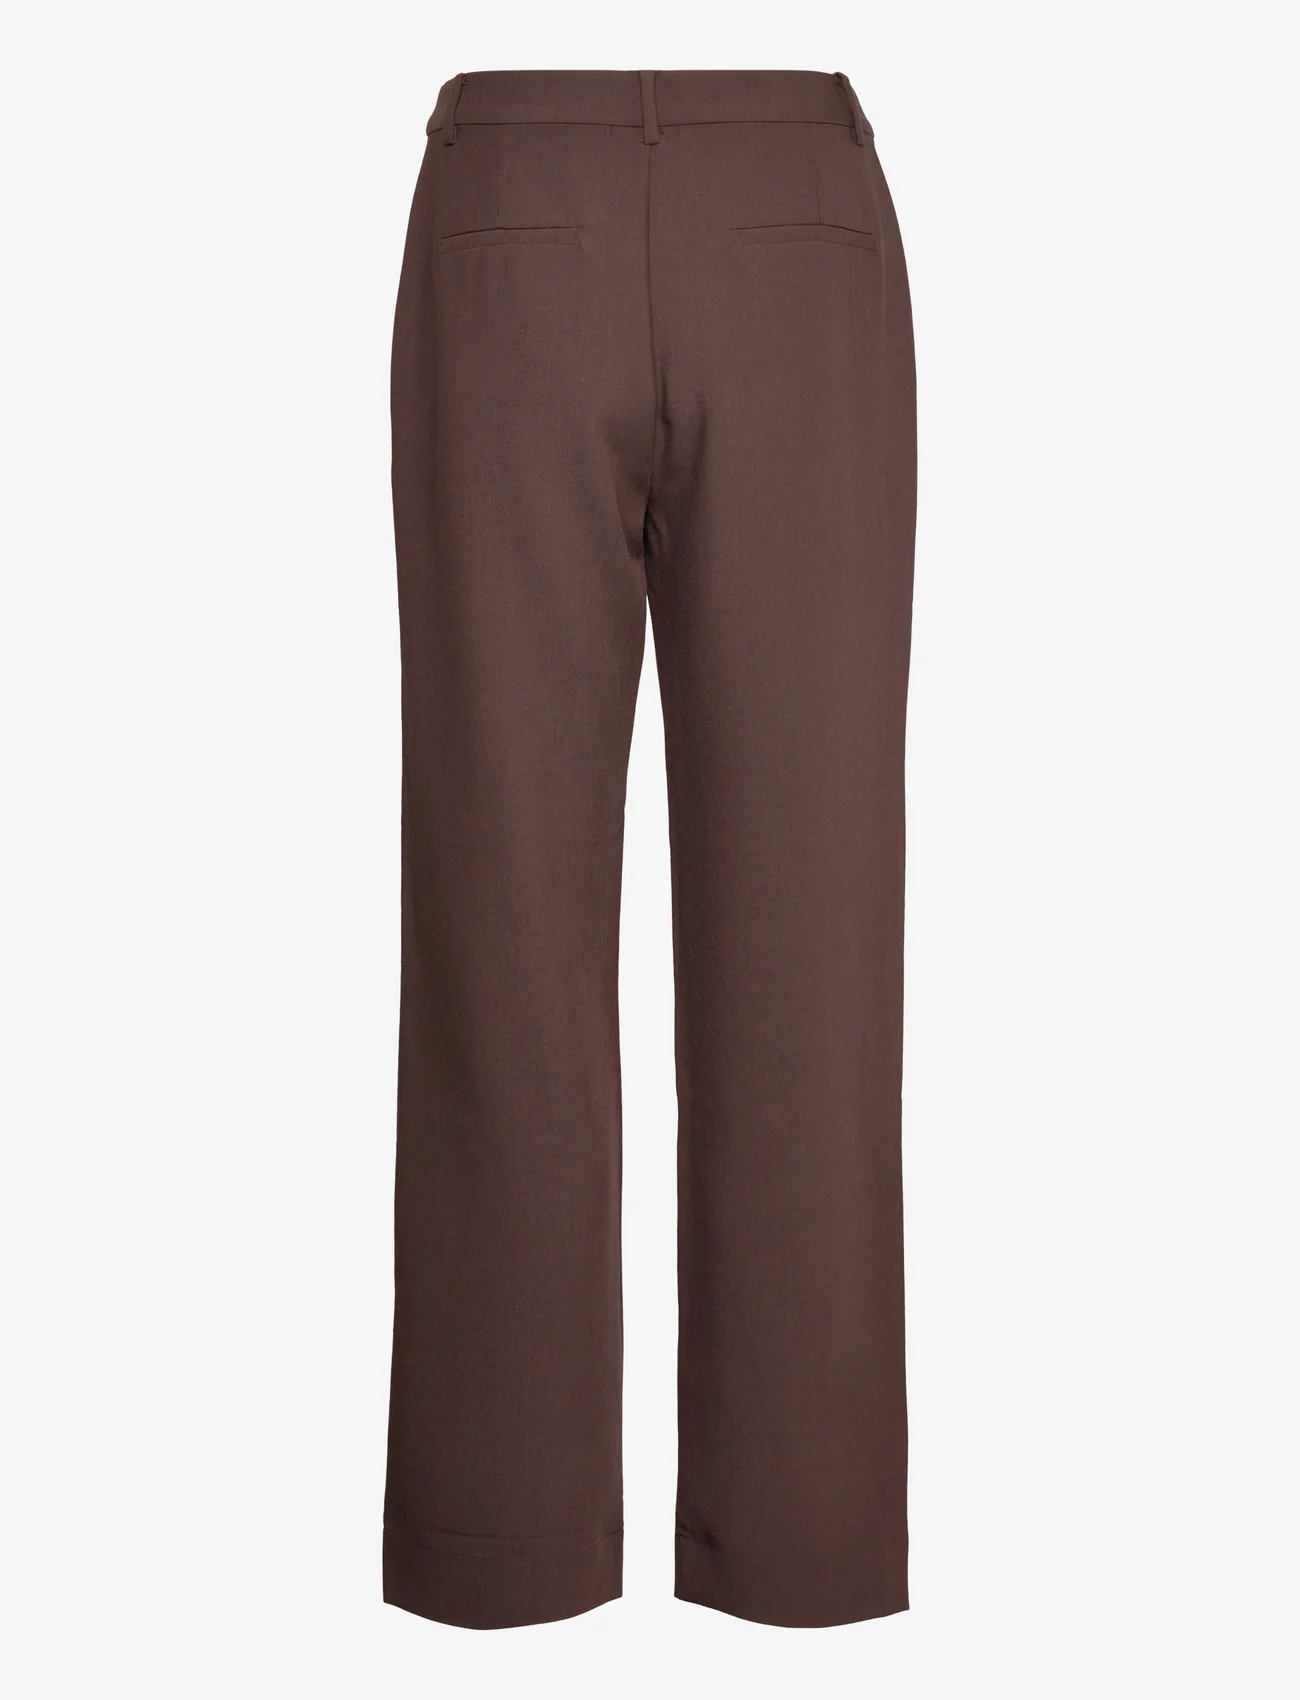 Envii - ENKAFIR PANTS 6797 - tailored trousers - java - 1